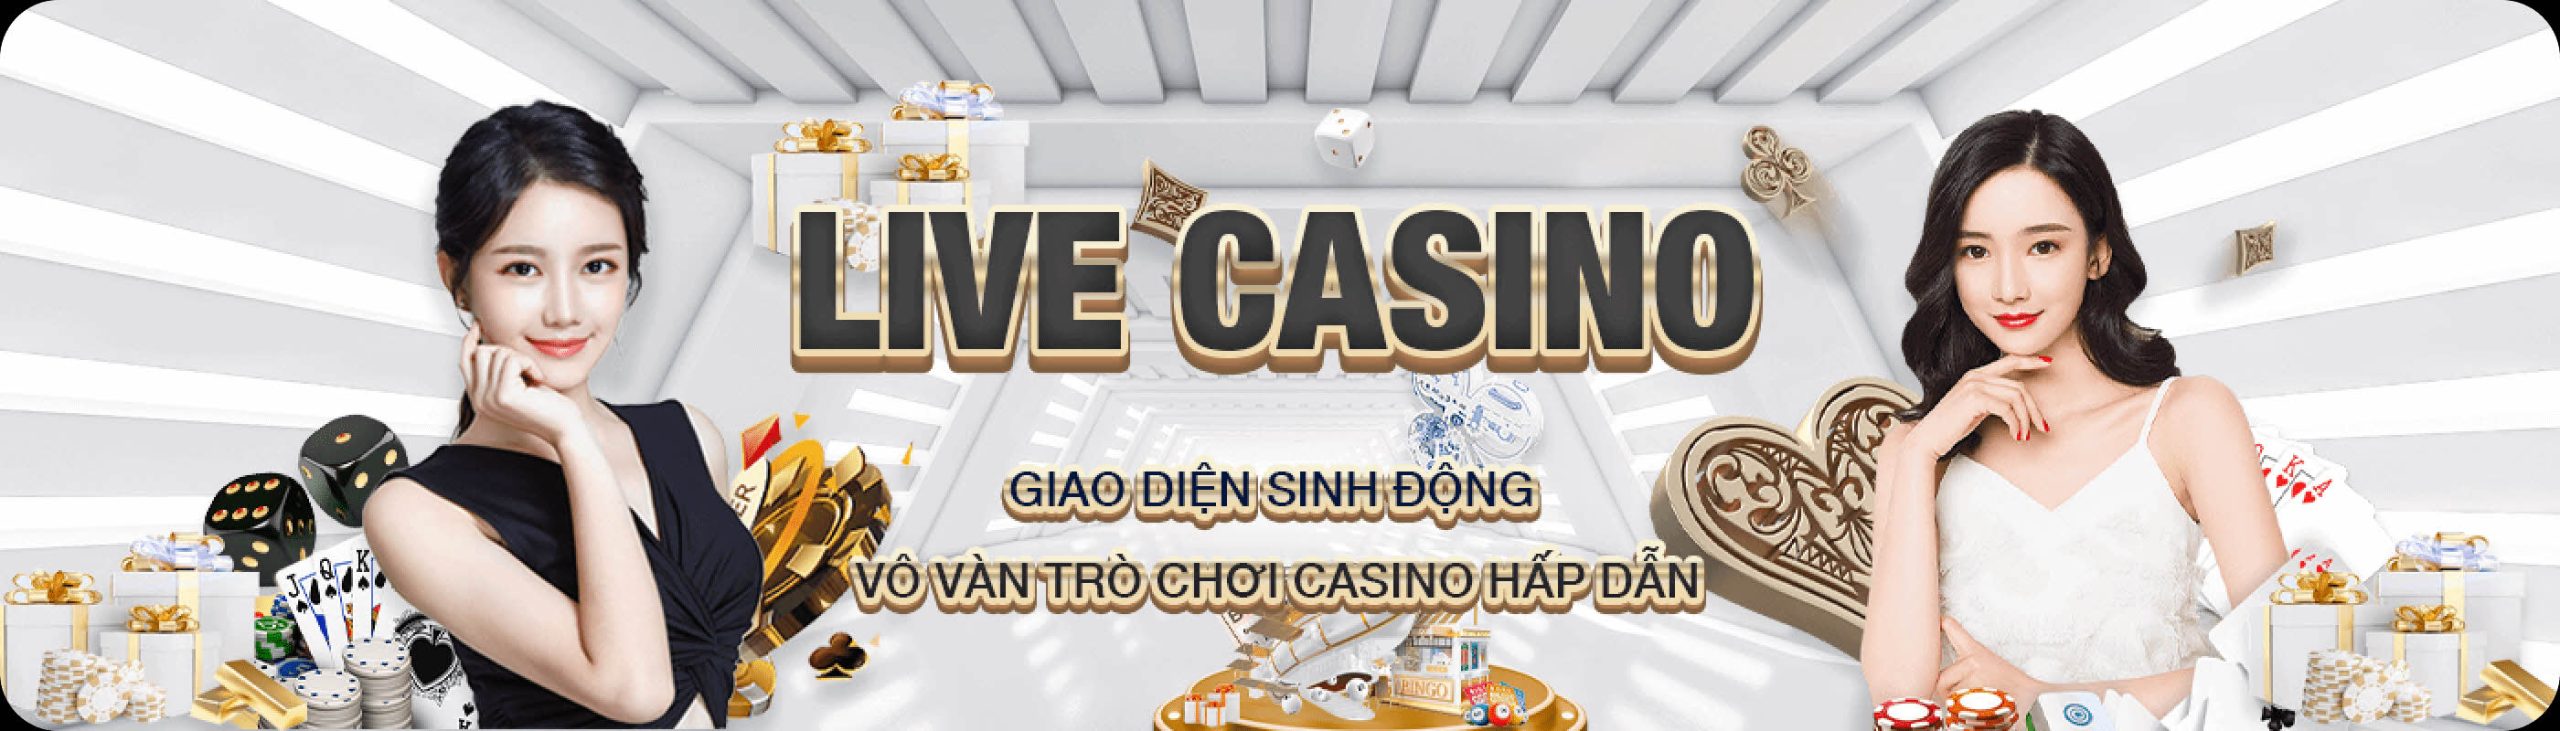 Live casino da dang nhieu sanh game hap dan scaled